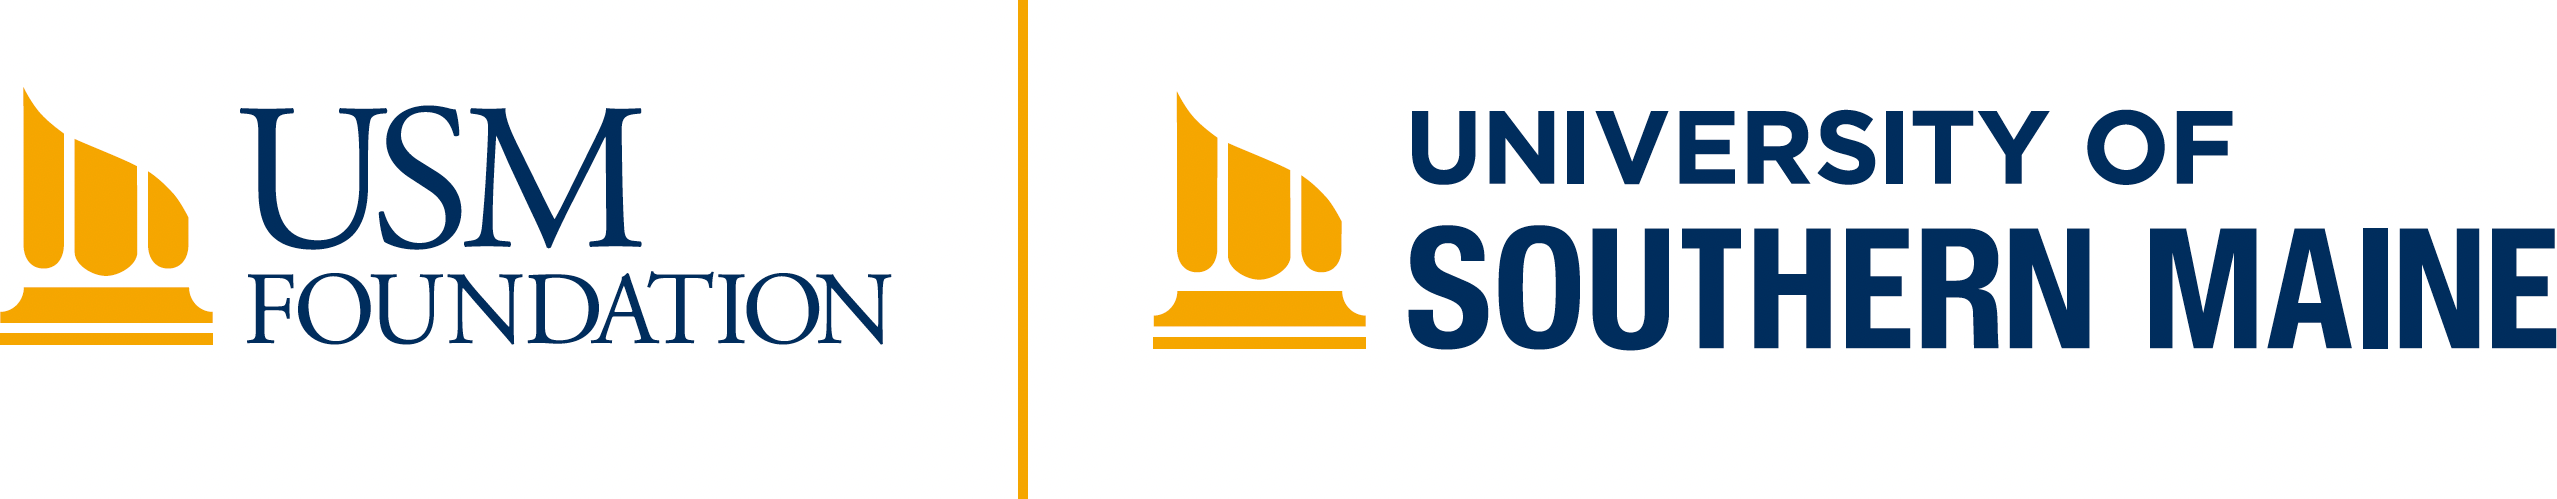 USM Foundation and University of Southern Maine logos